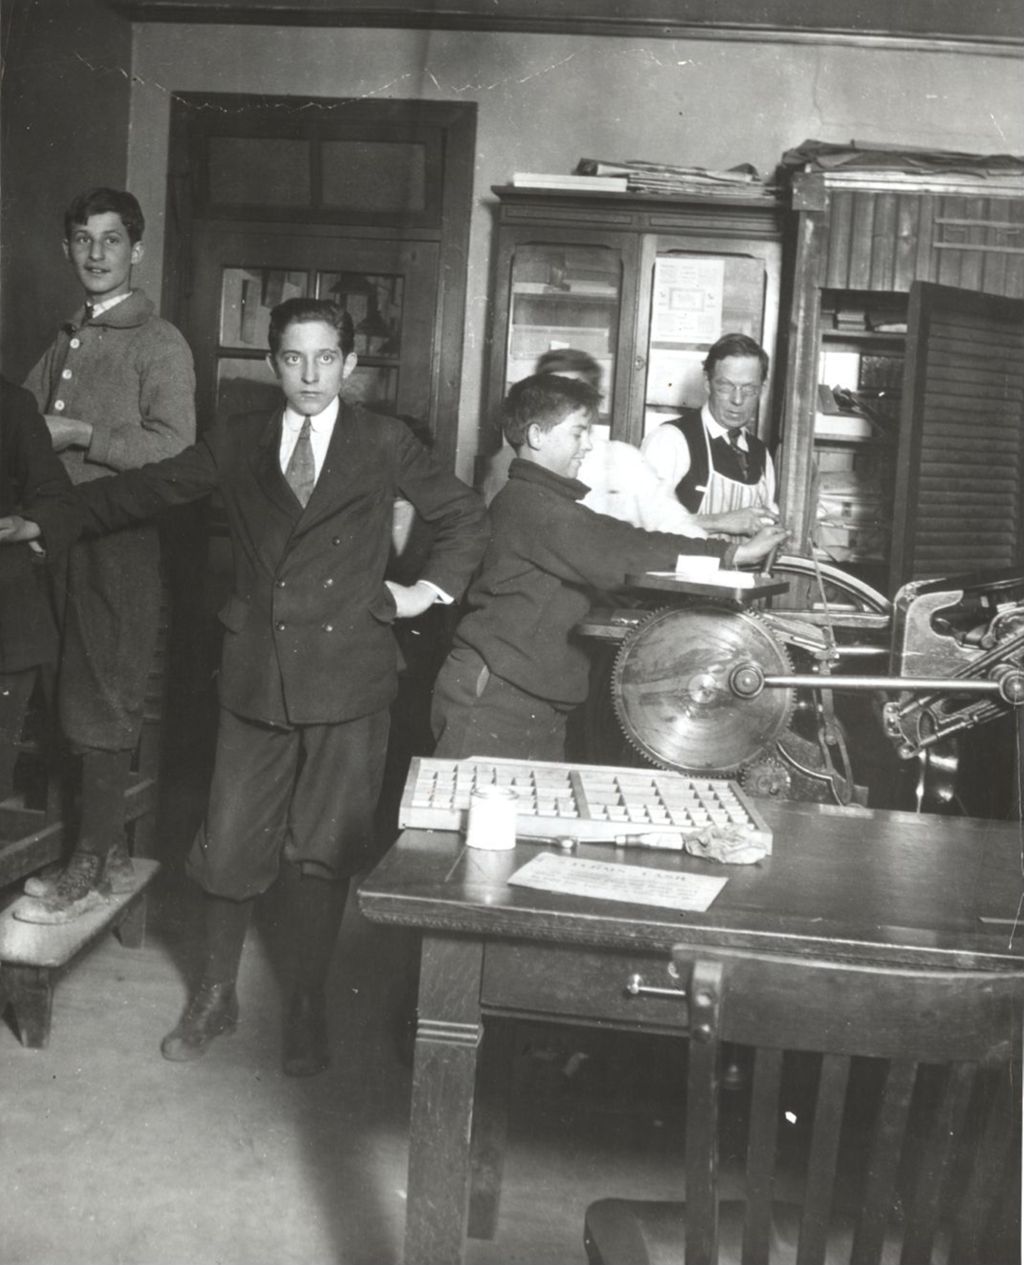 Printing press class in Hull-House boys' club